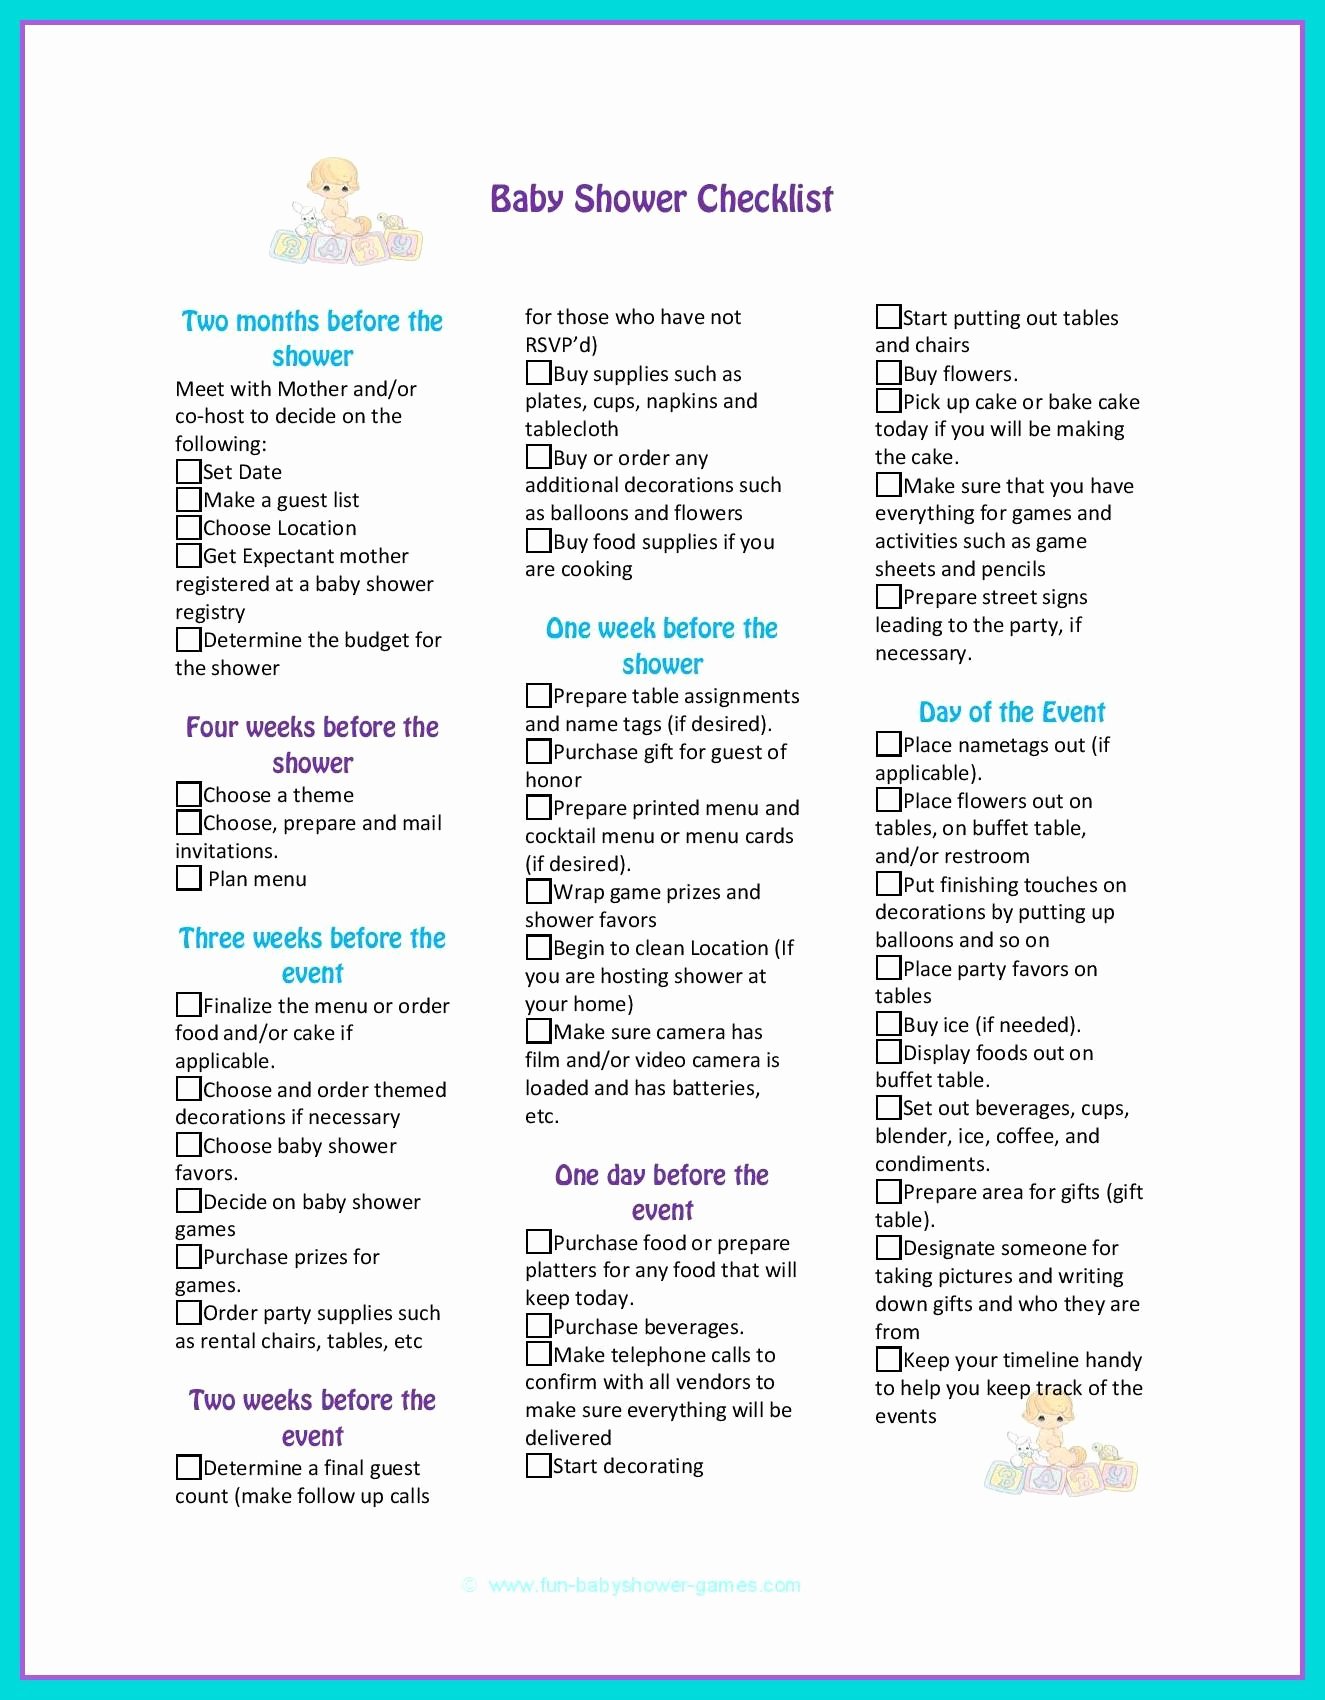 Baby Shower Planning List Elegant Baby Shower Checklist to Help Plan the Perfect Baby Shower